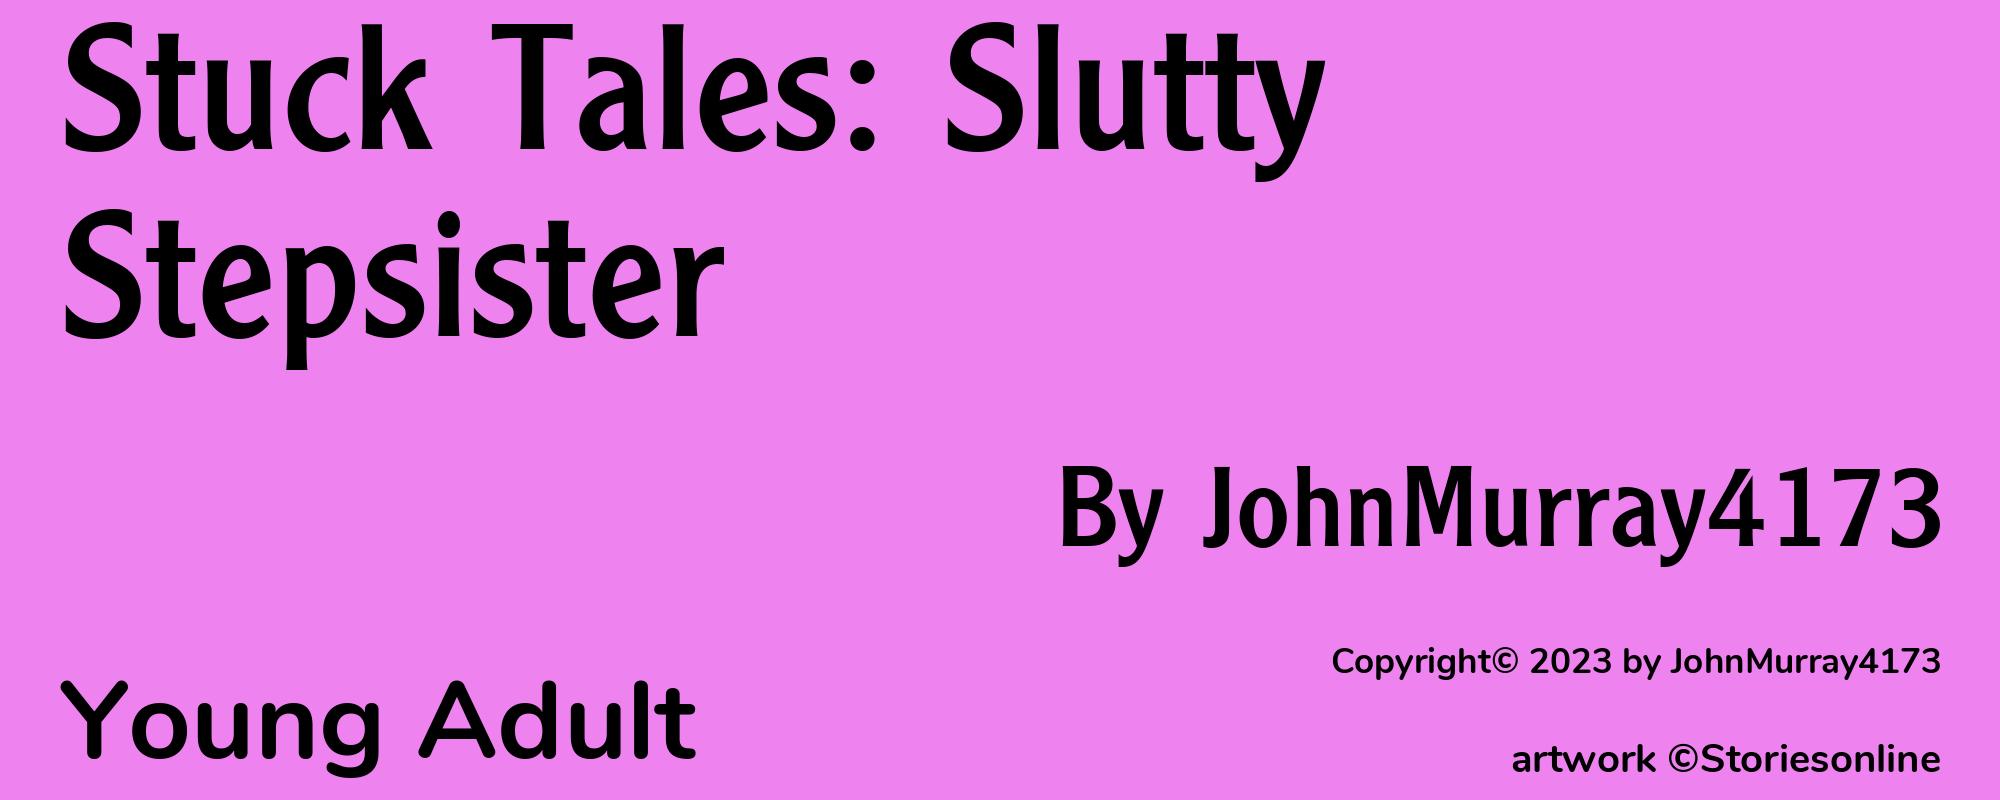 Stuck Tales: Slutty Stepsister - Cover